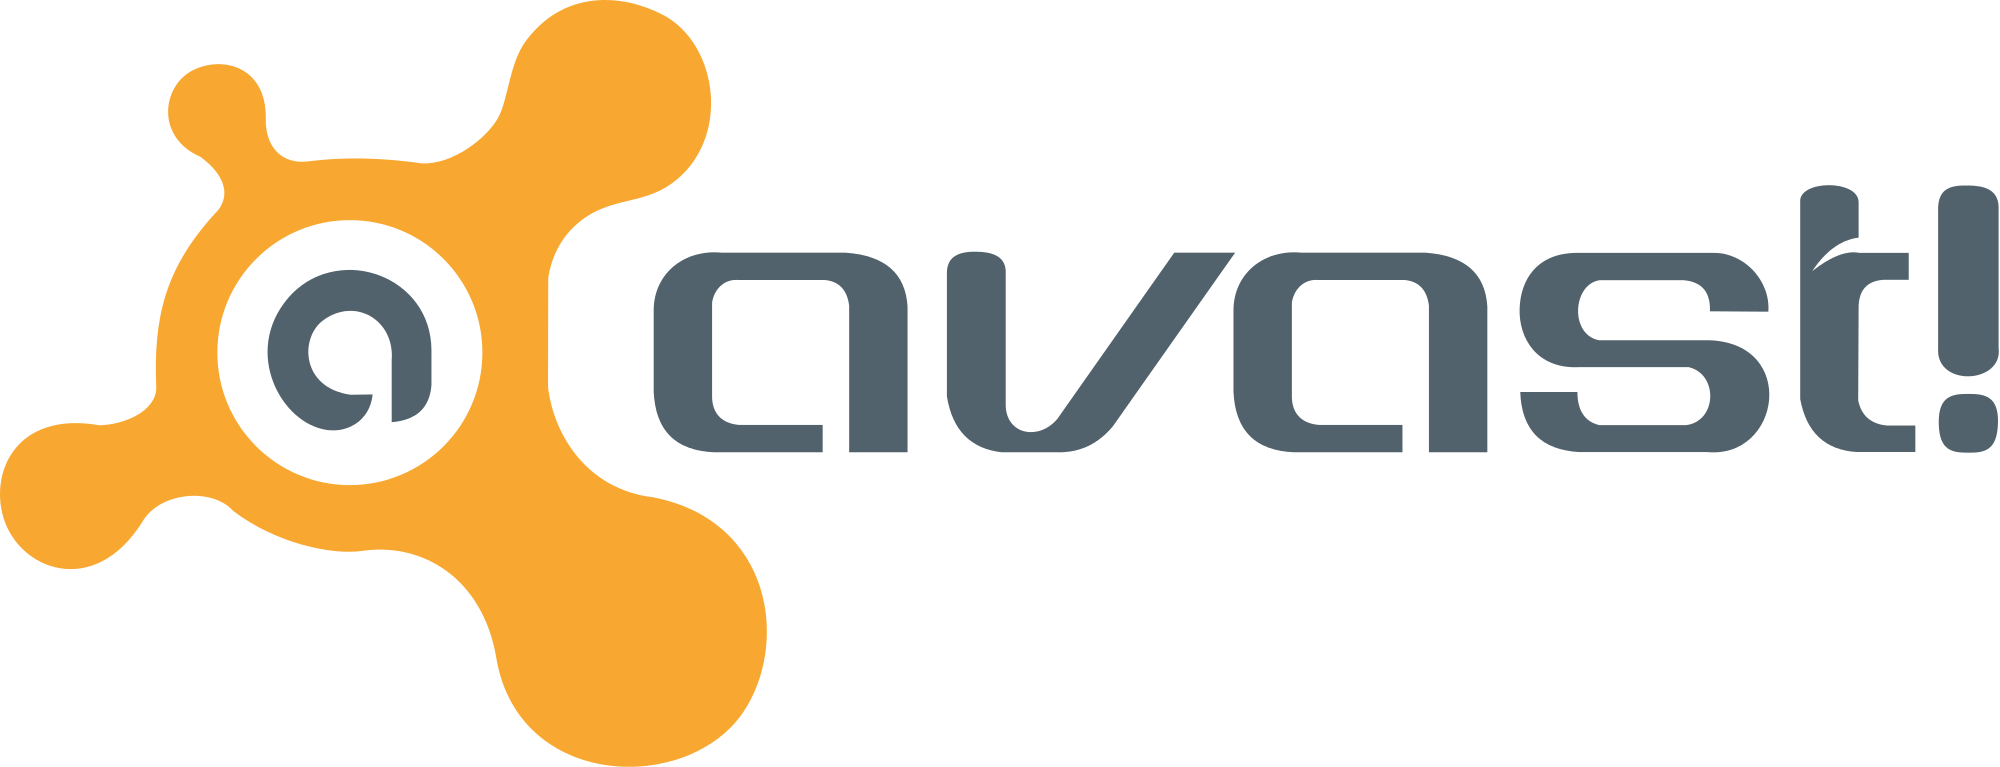 Avast Logo PNG - 108141